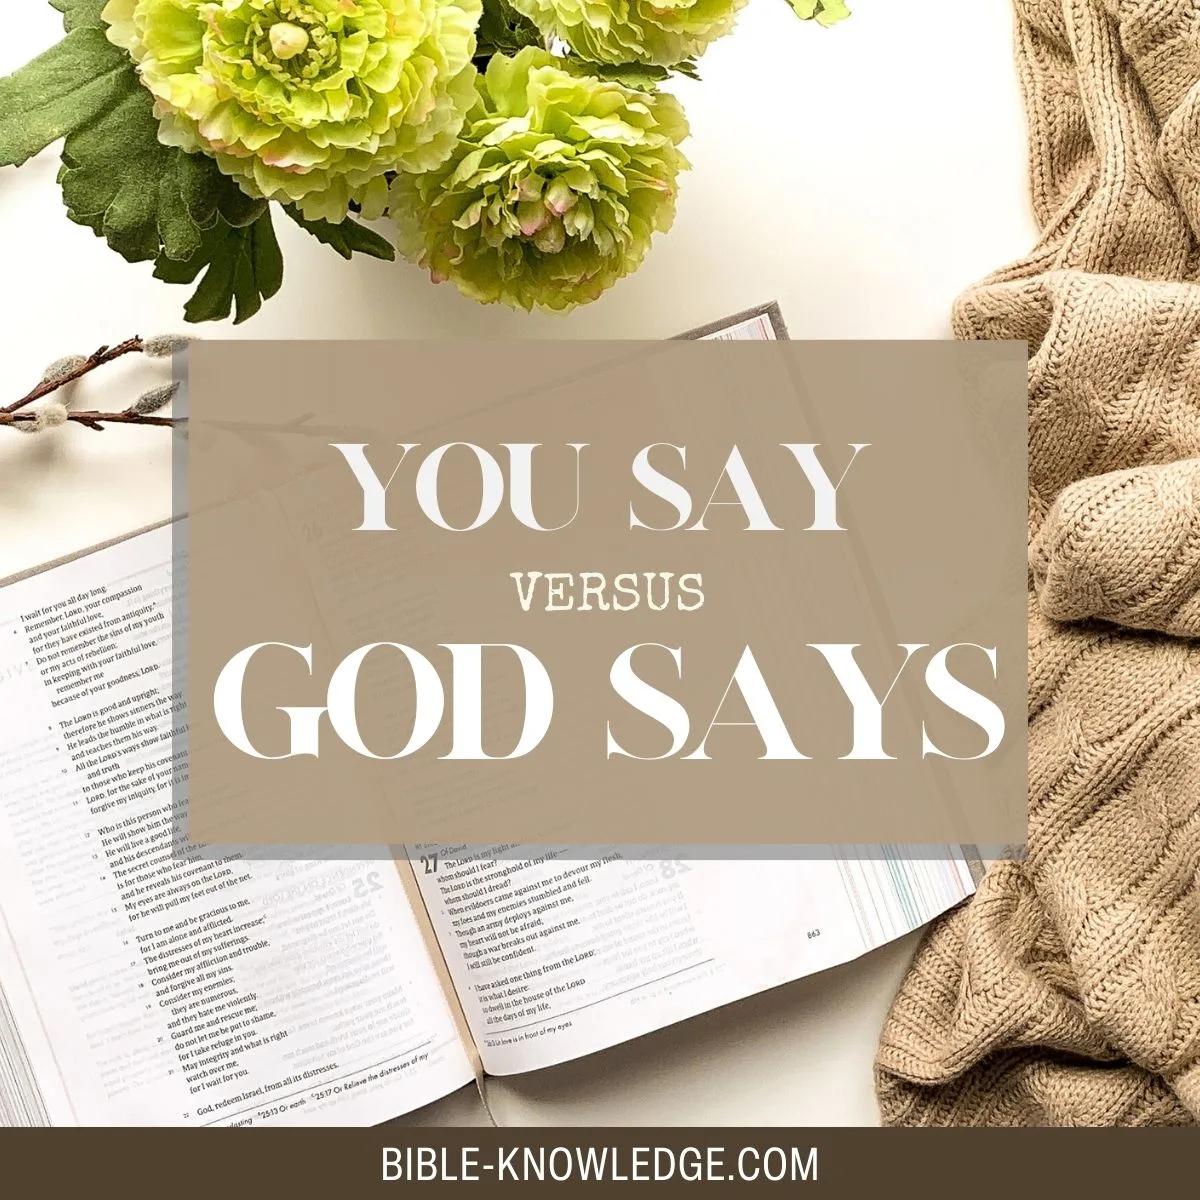 You Say versus God Says